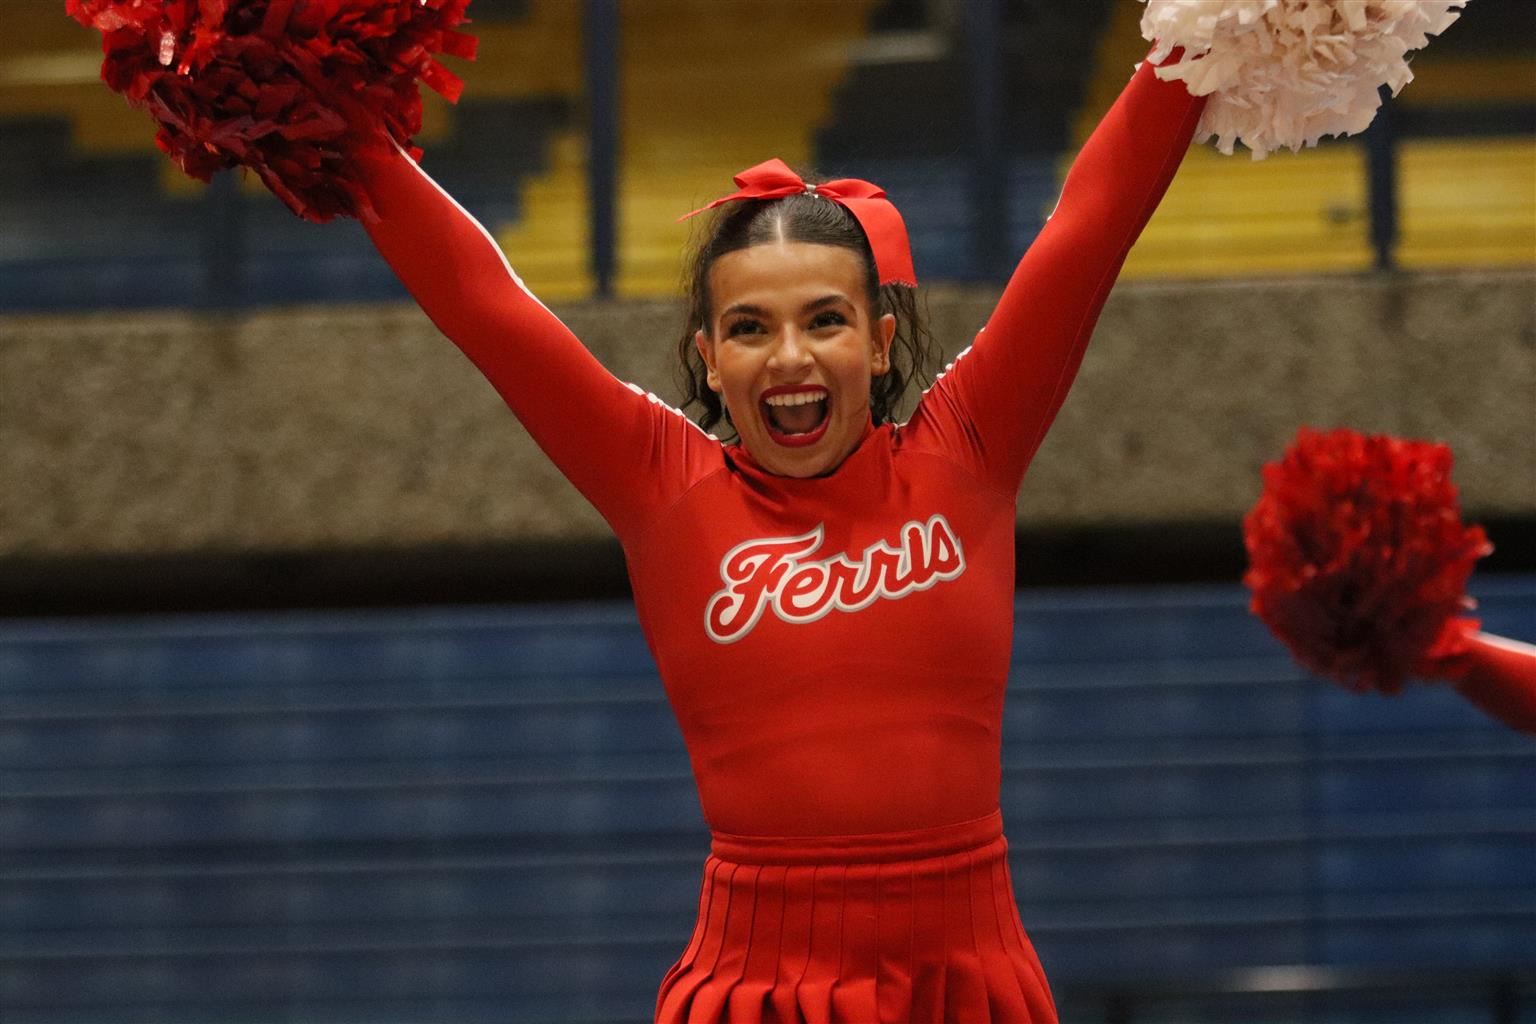 Photo of cheerleader in red uniform